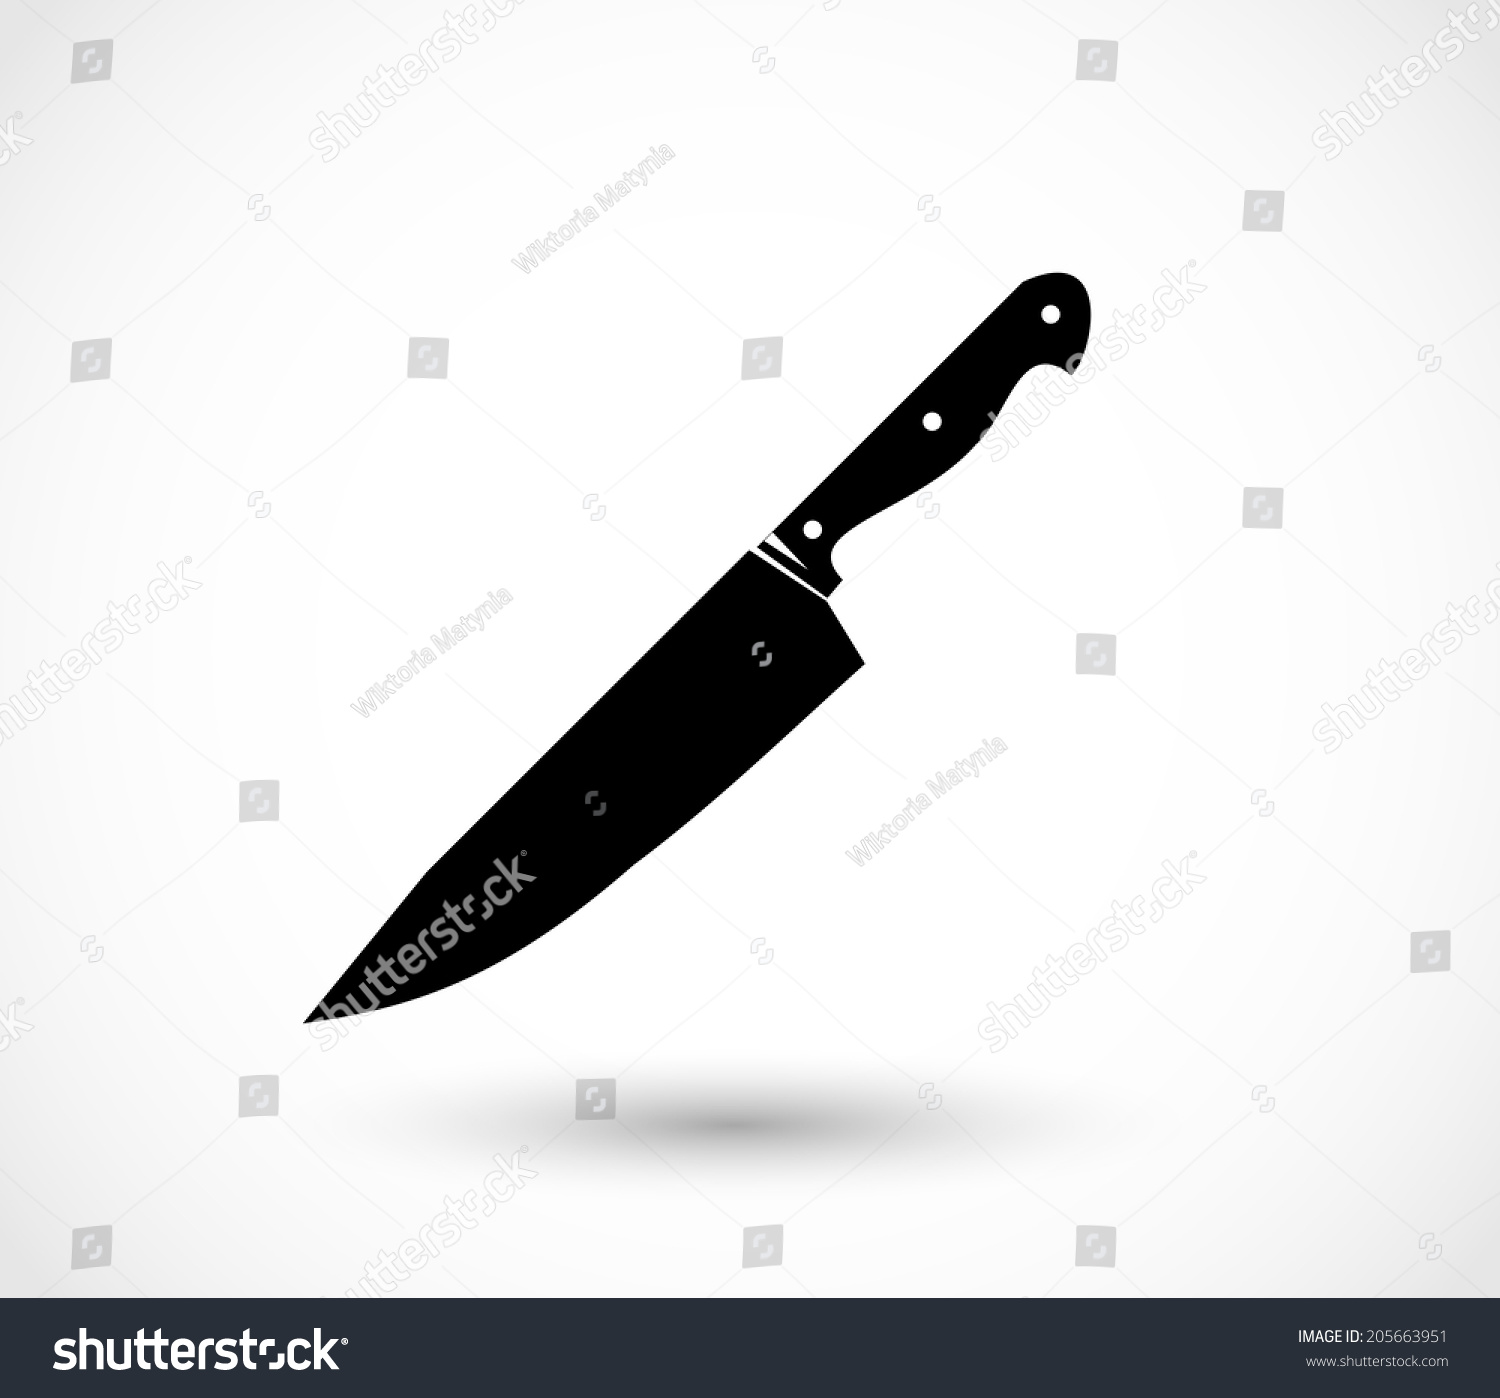 Knife Icon Vector - 205663951 : Shutterstock